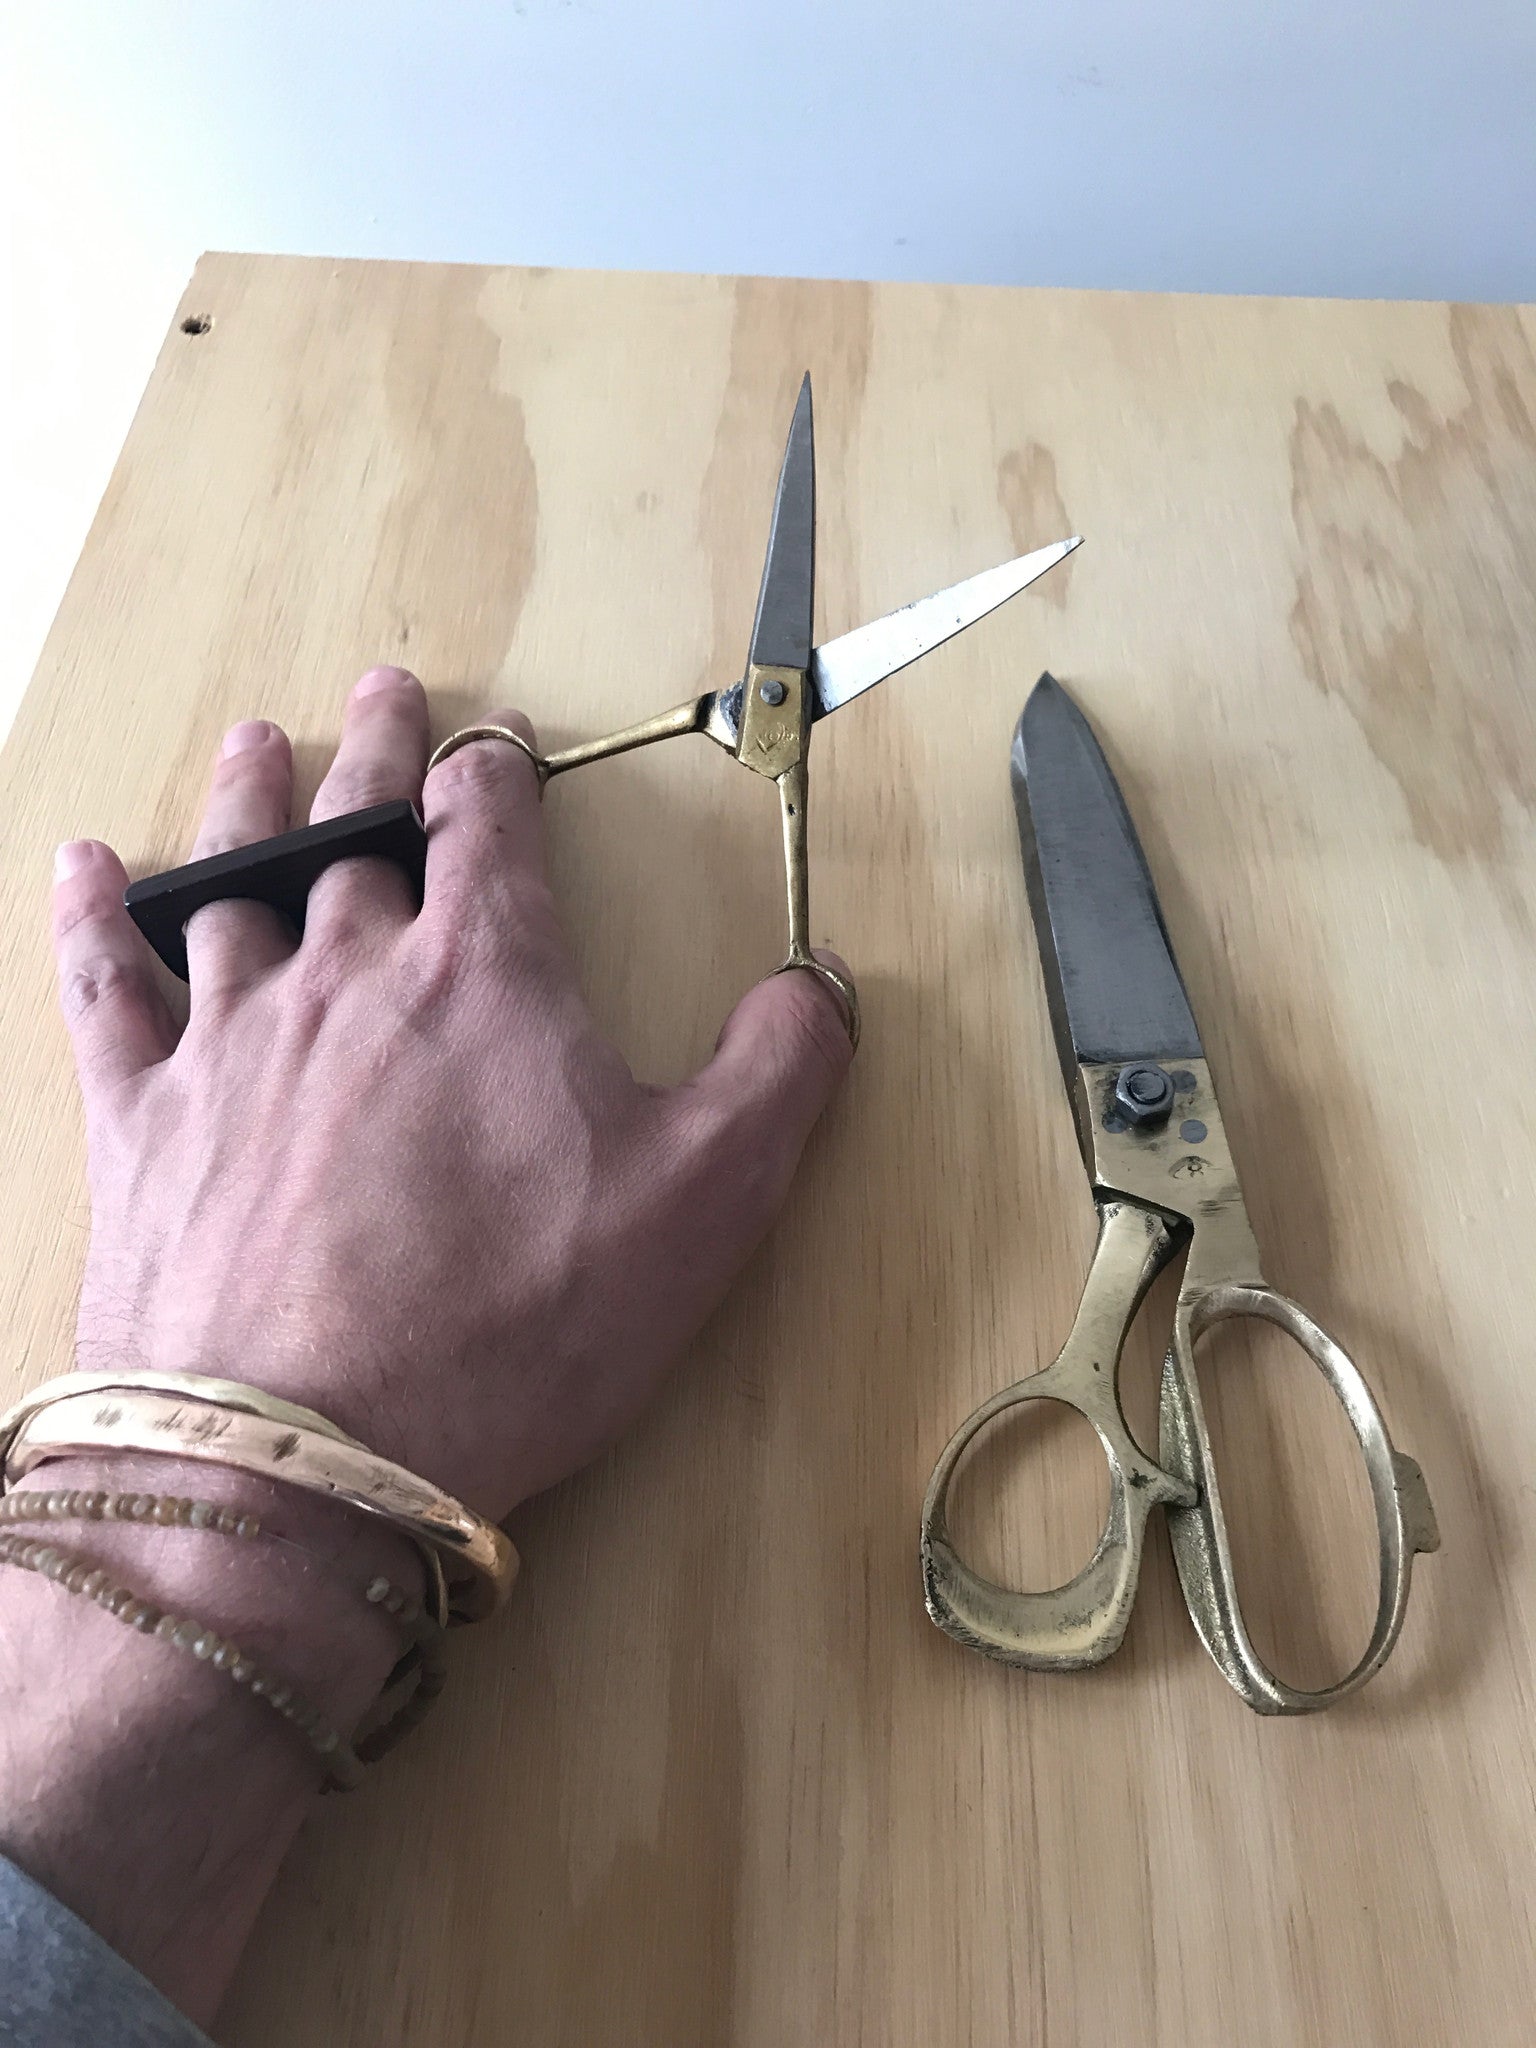 Brass Handled Craft Scissors – Large - Upstate MN 